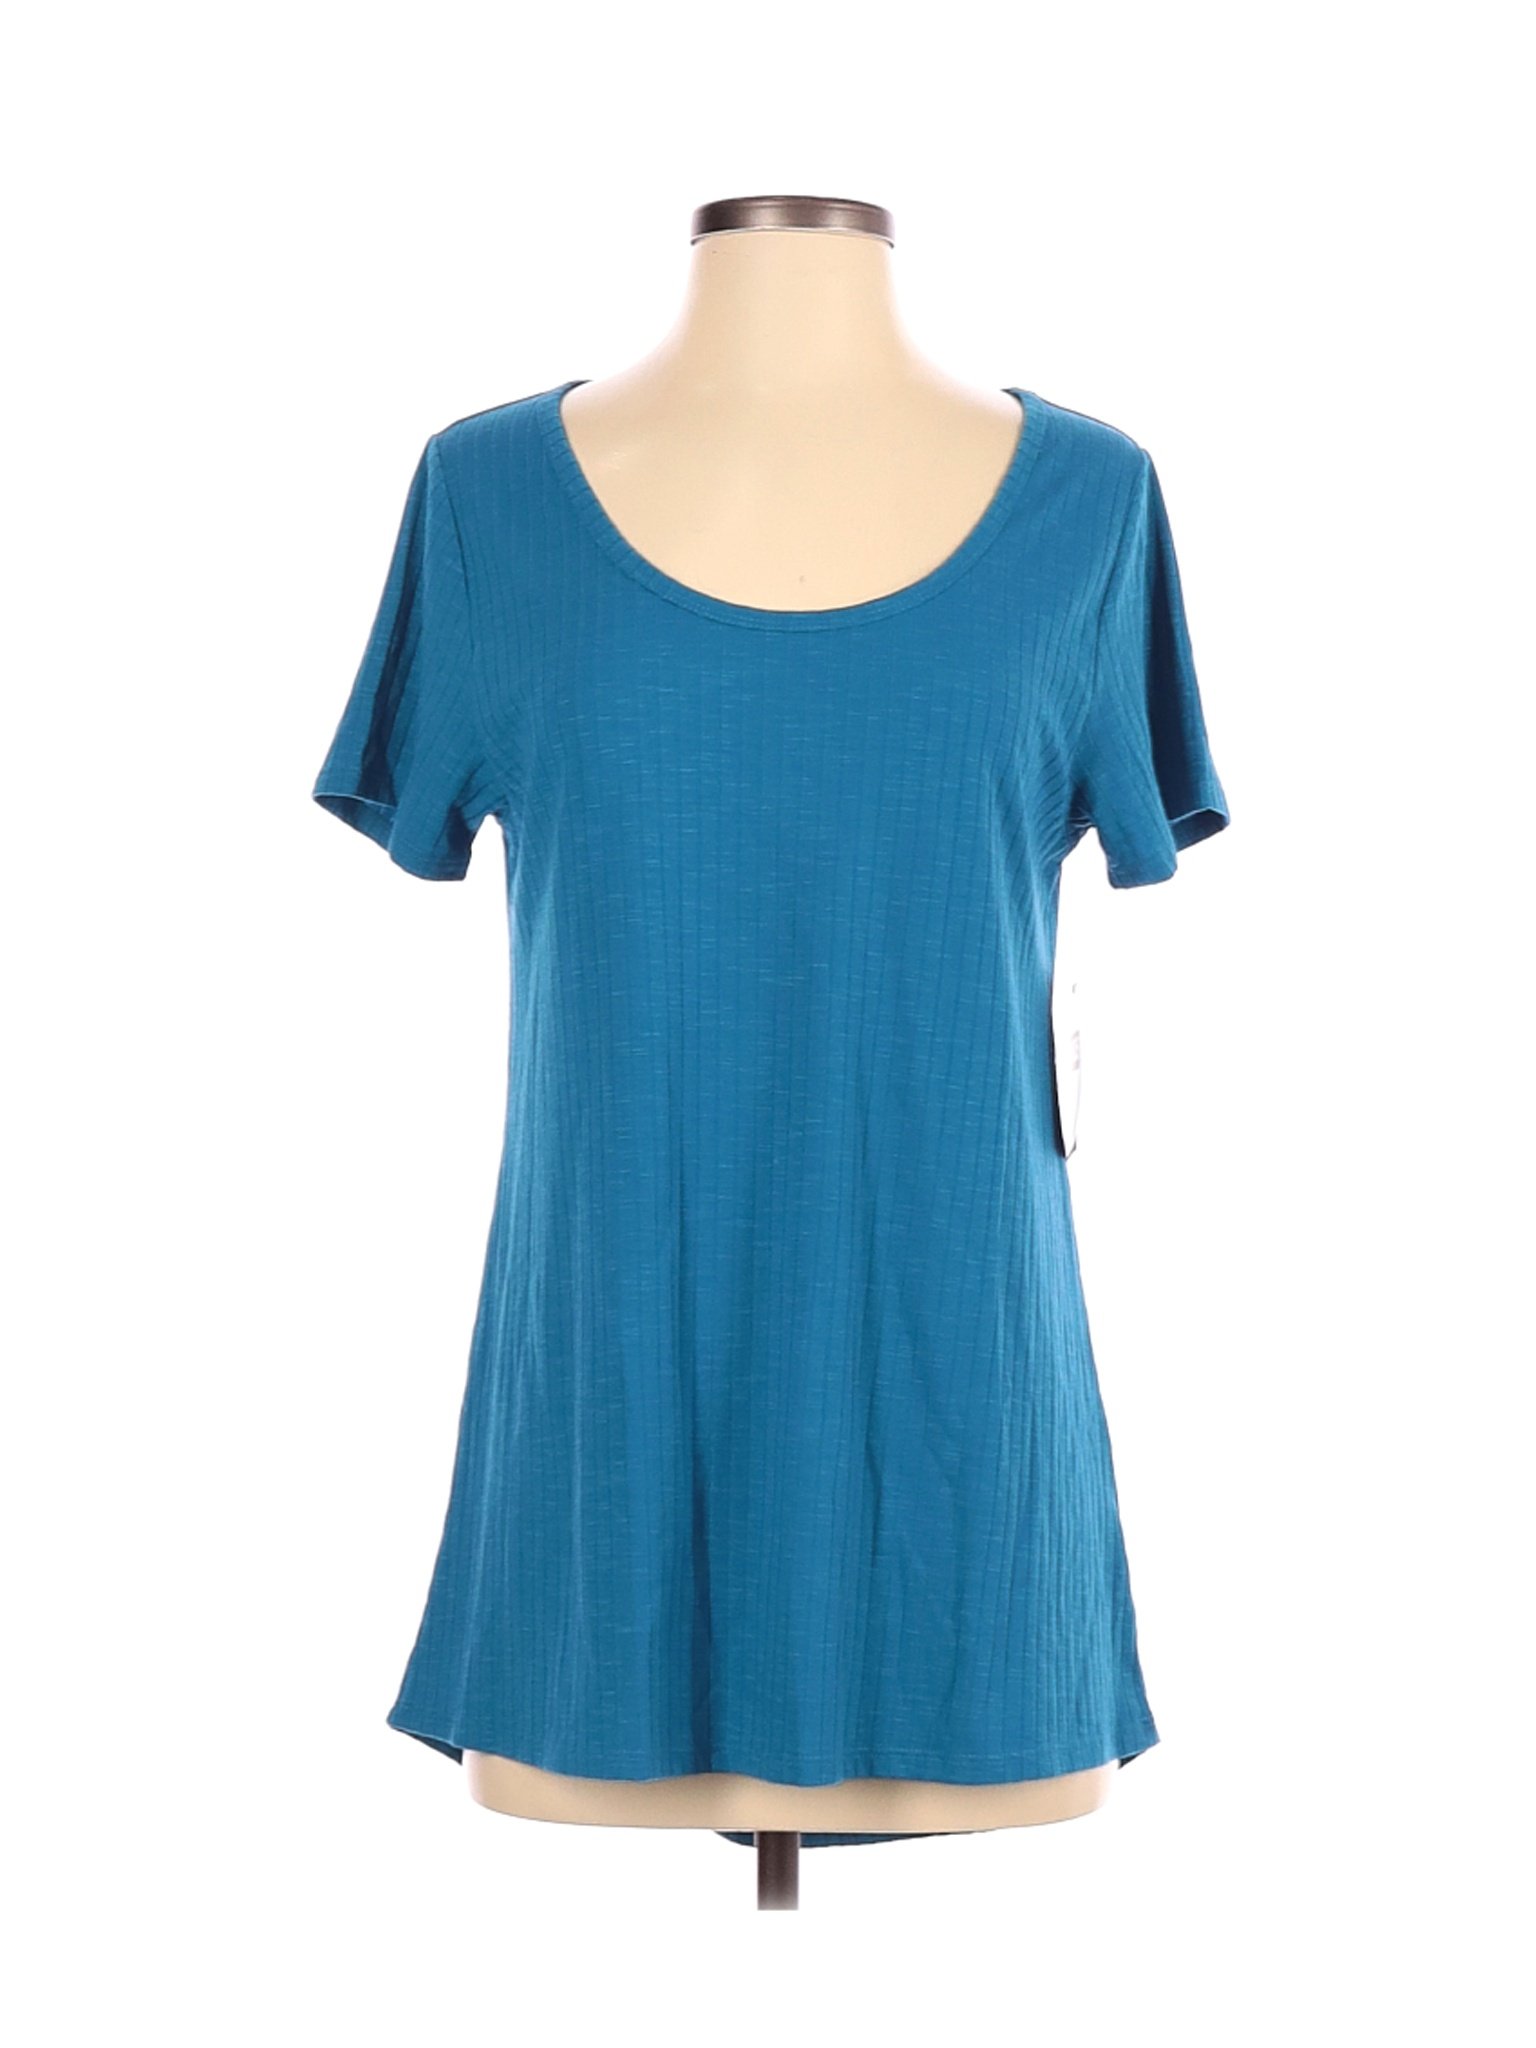 NWT Lularoe Women Green Short Sleeve T-Shirt S | eBay